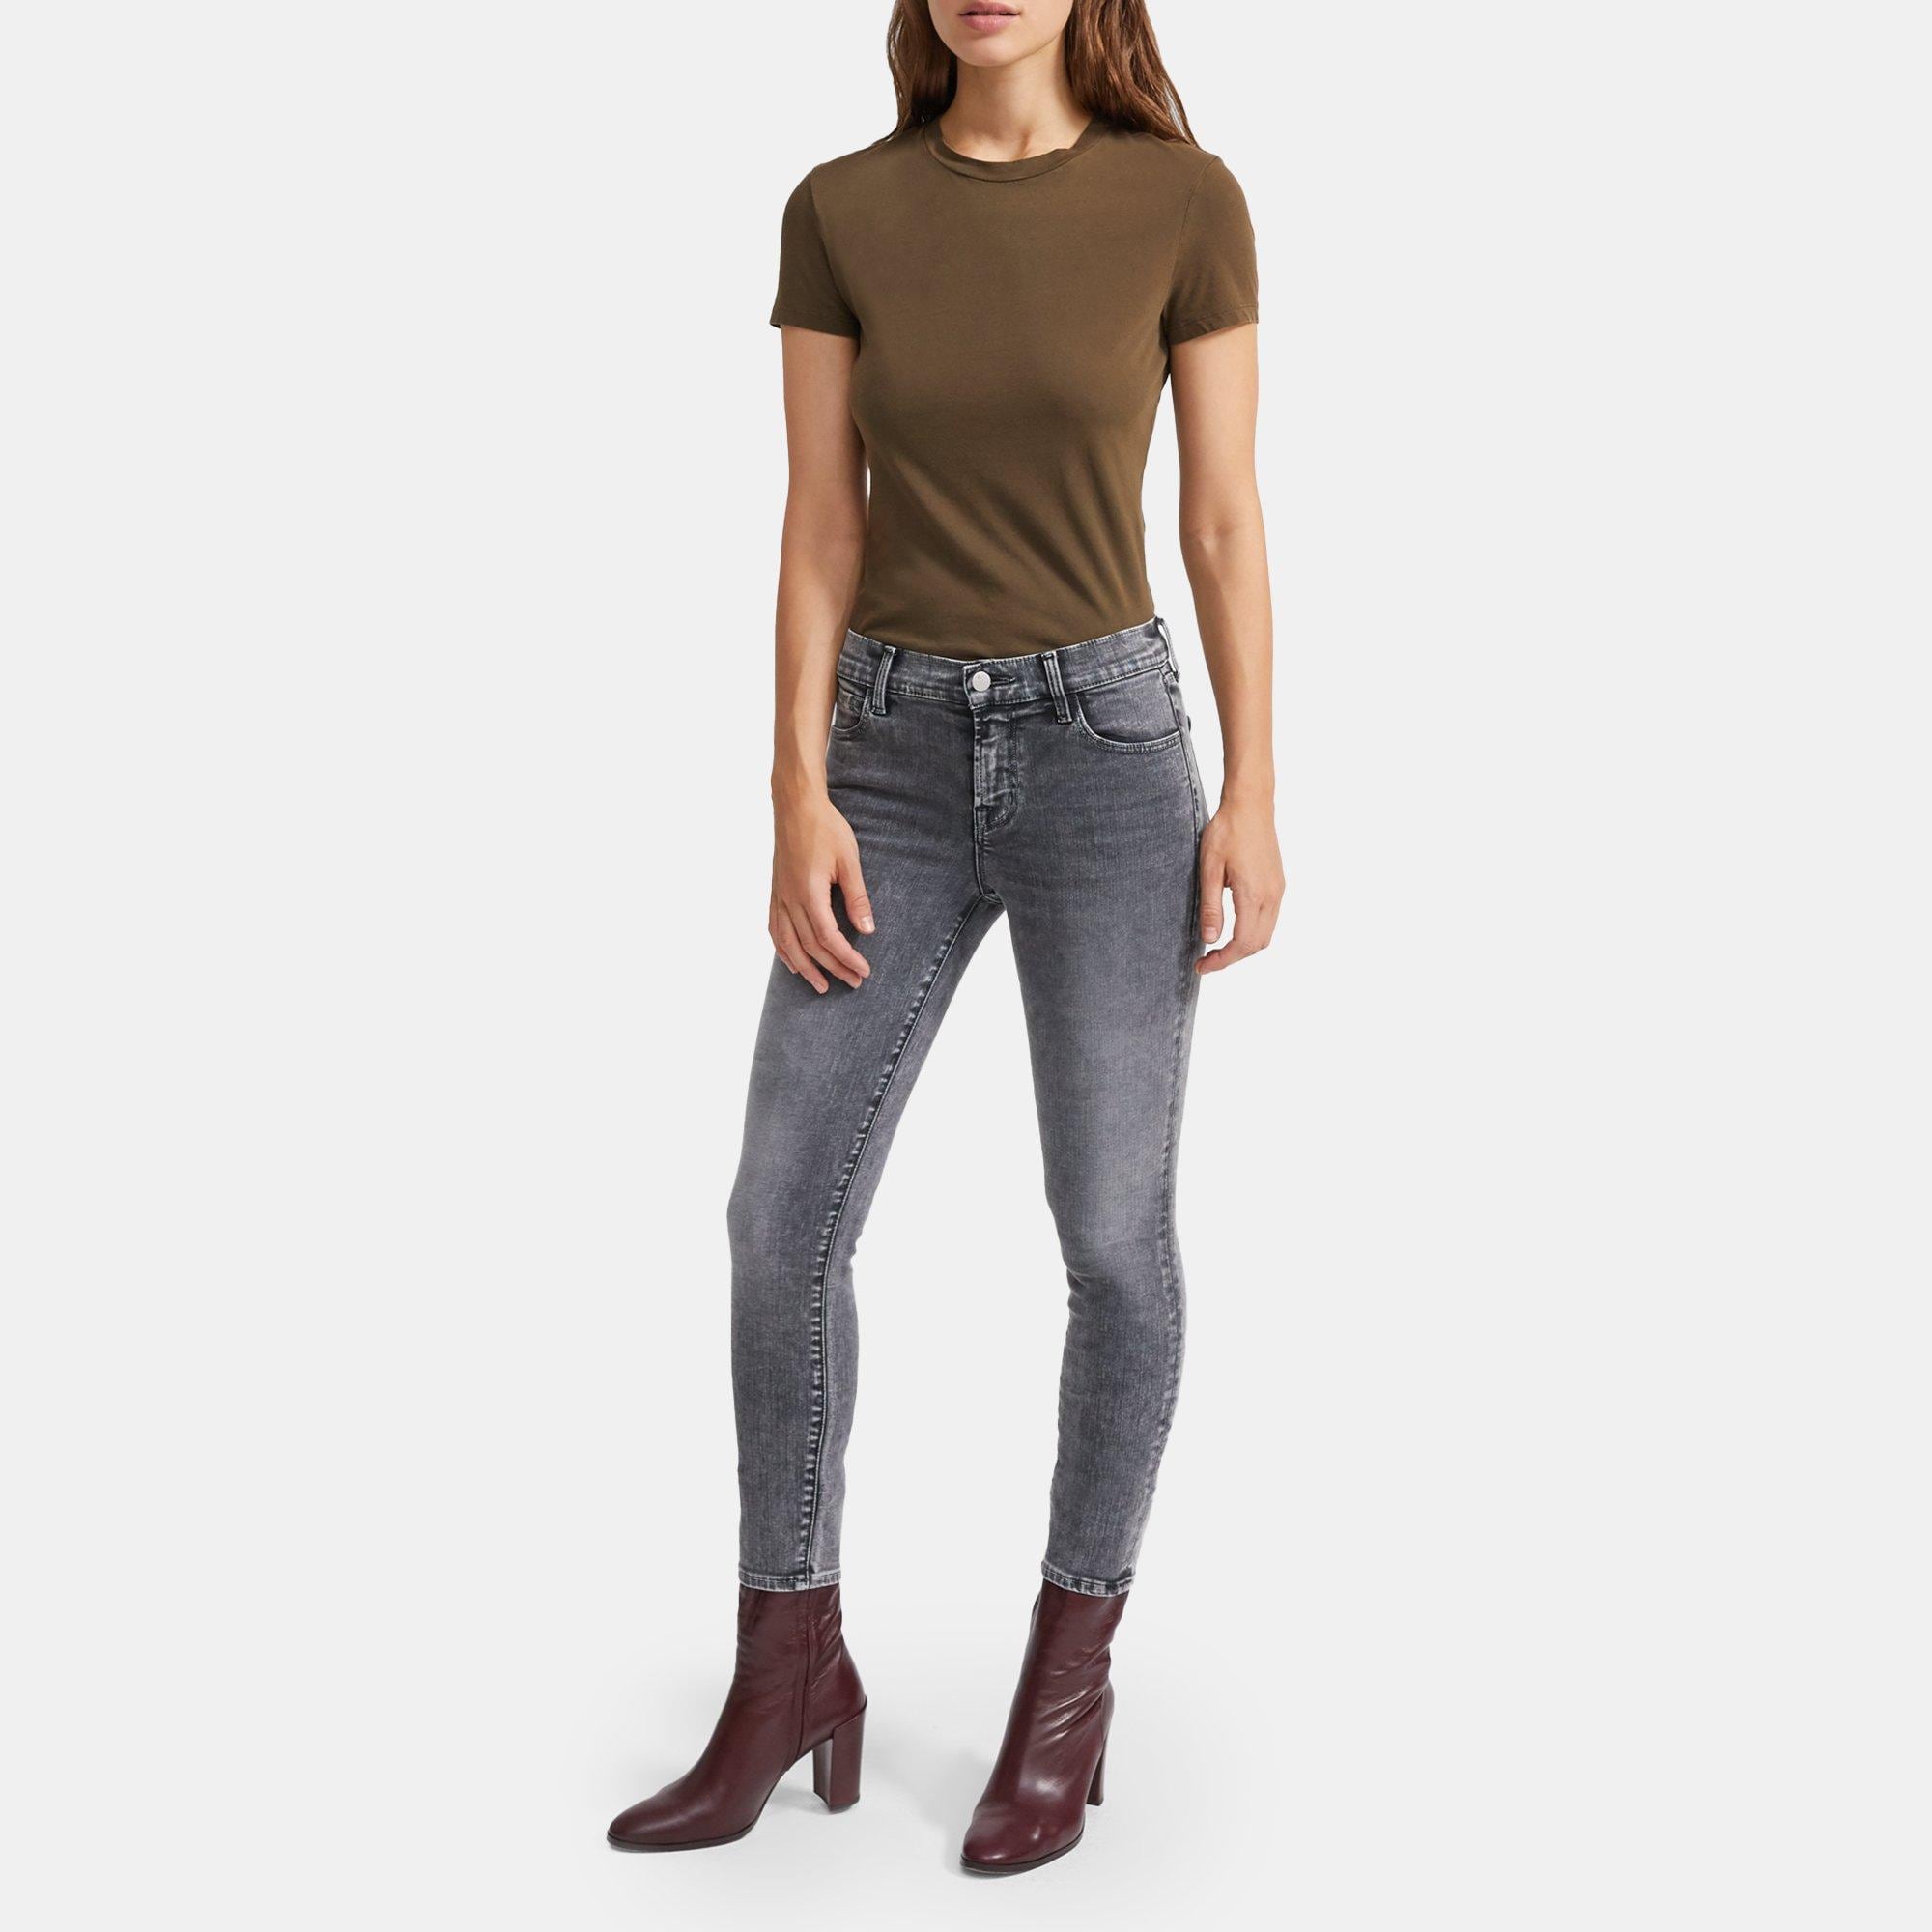 J Brand Women's Capri Mid Rise Jeans in Civil Size 26 - $33 - From Jessica